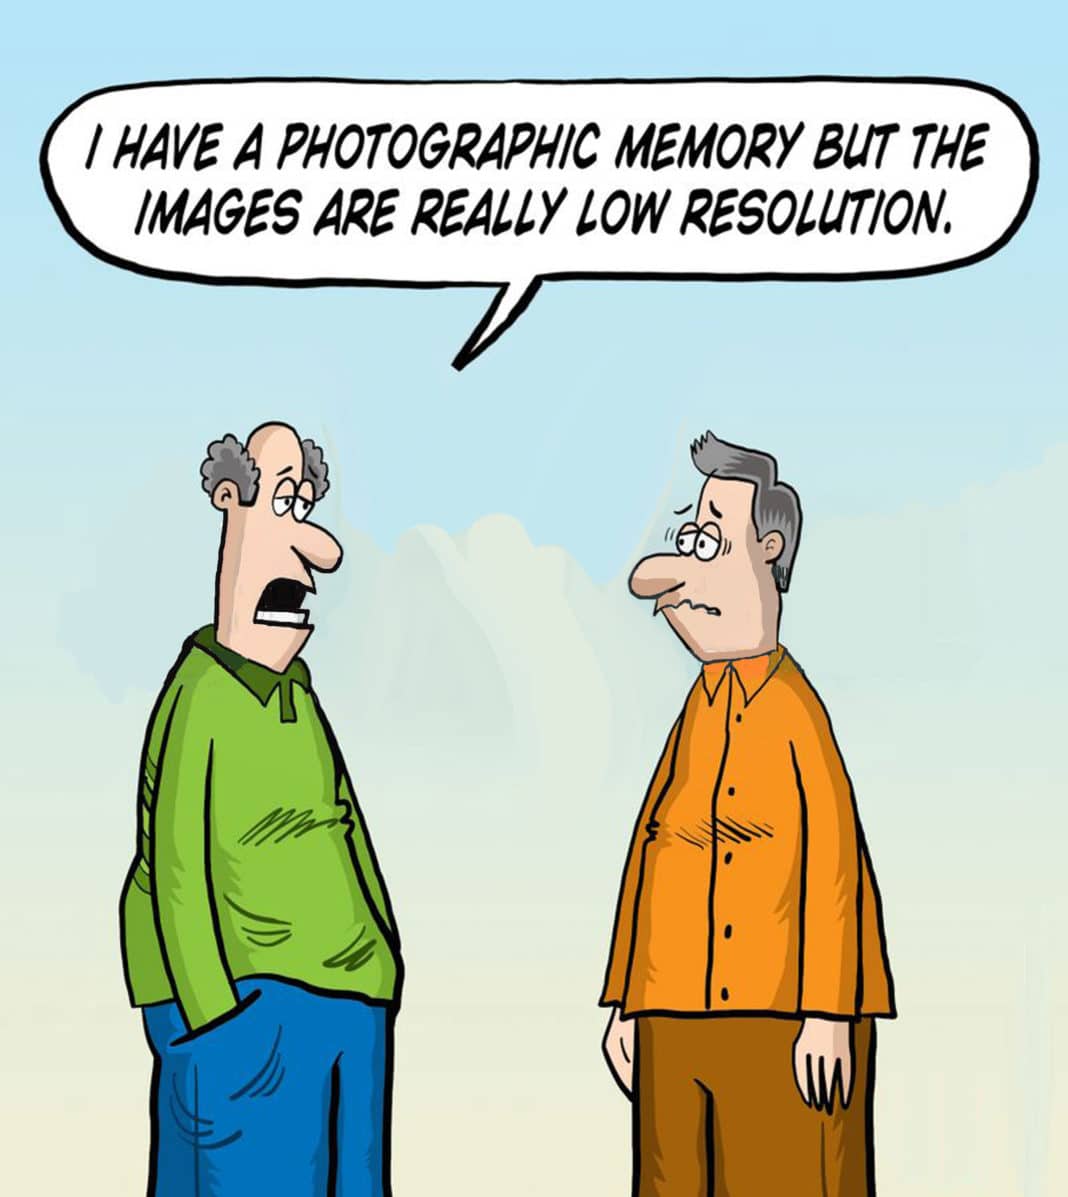 Low resolution memory